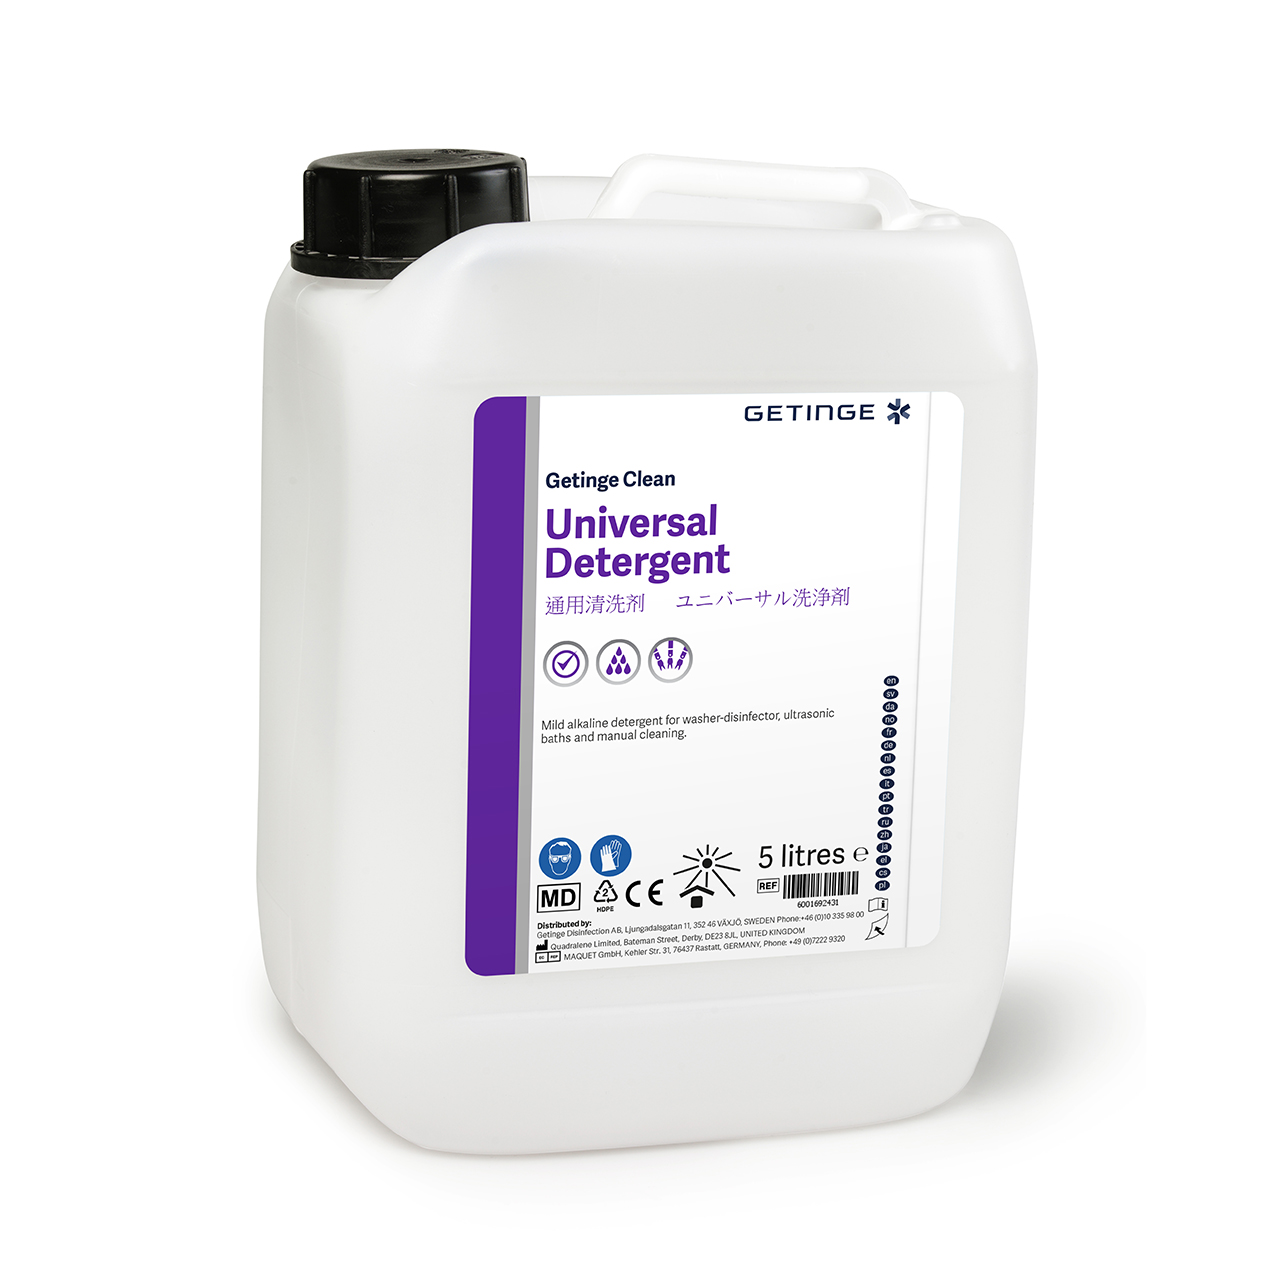 Getinge Clean Universal Detergent is a mild low foaming, non-abrasive, alkaline based cleaner.